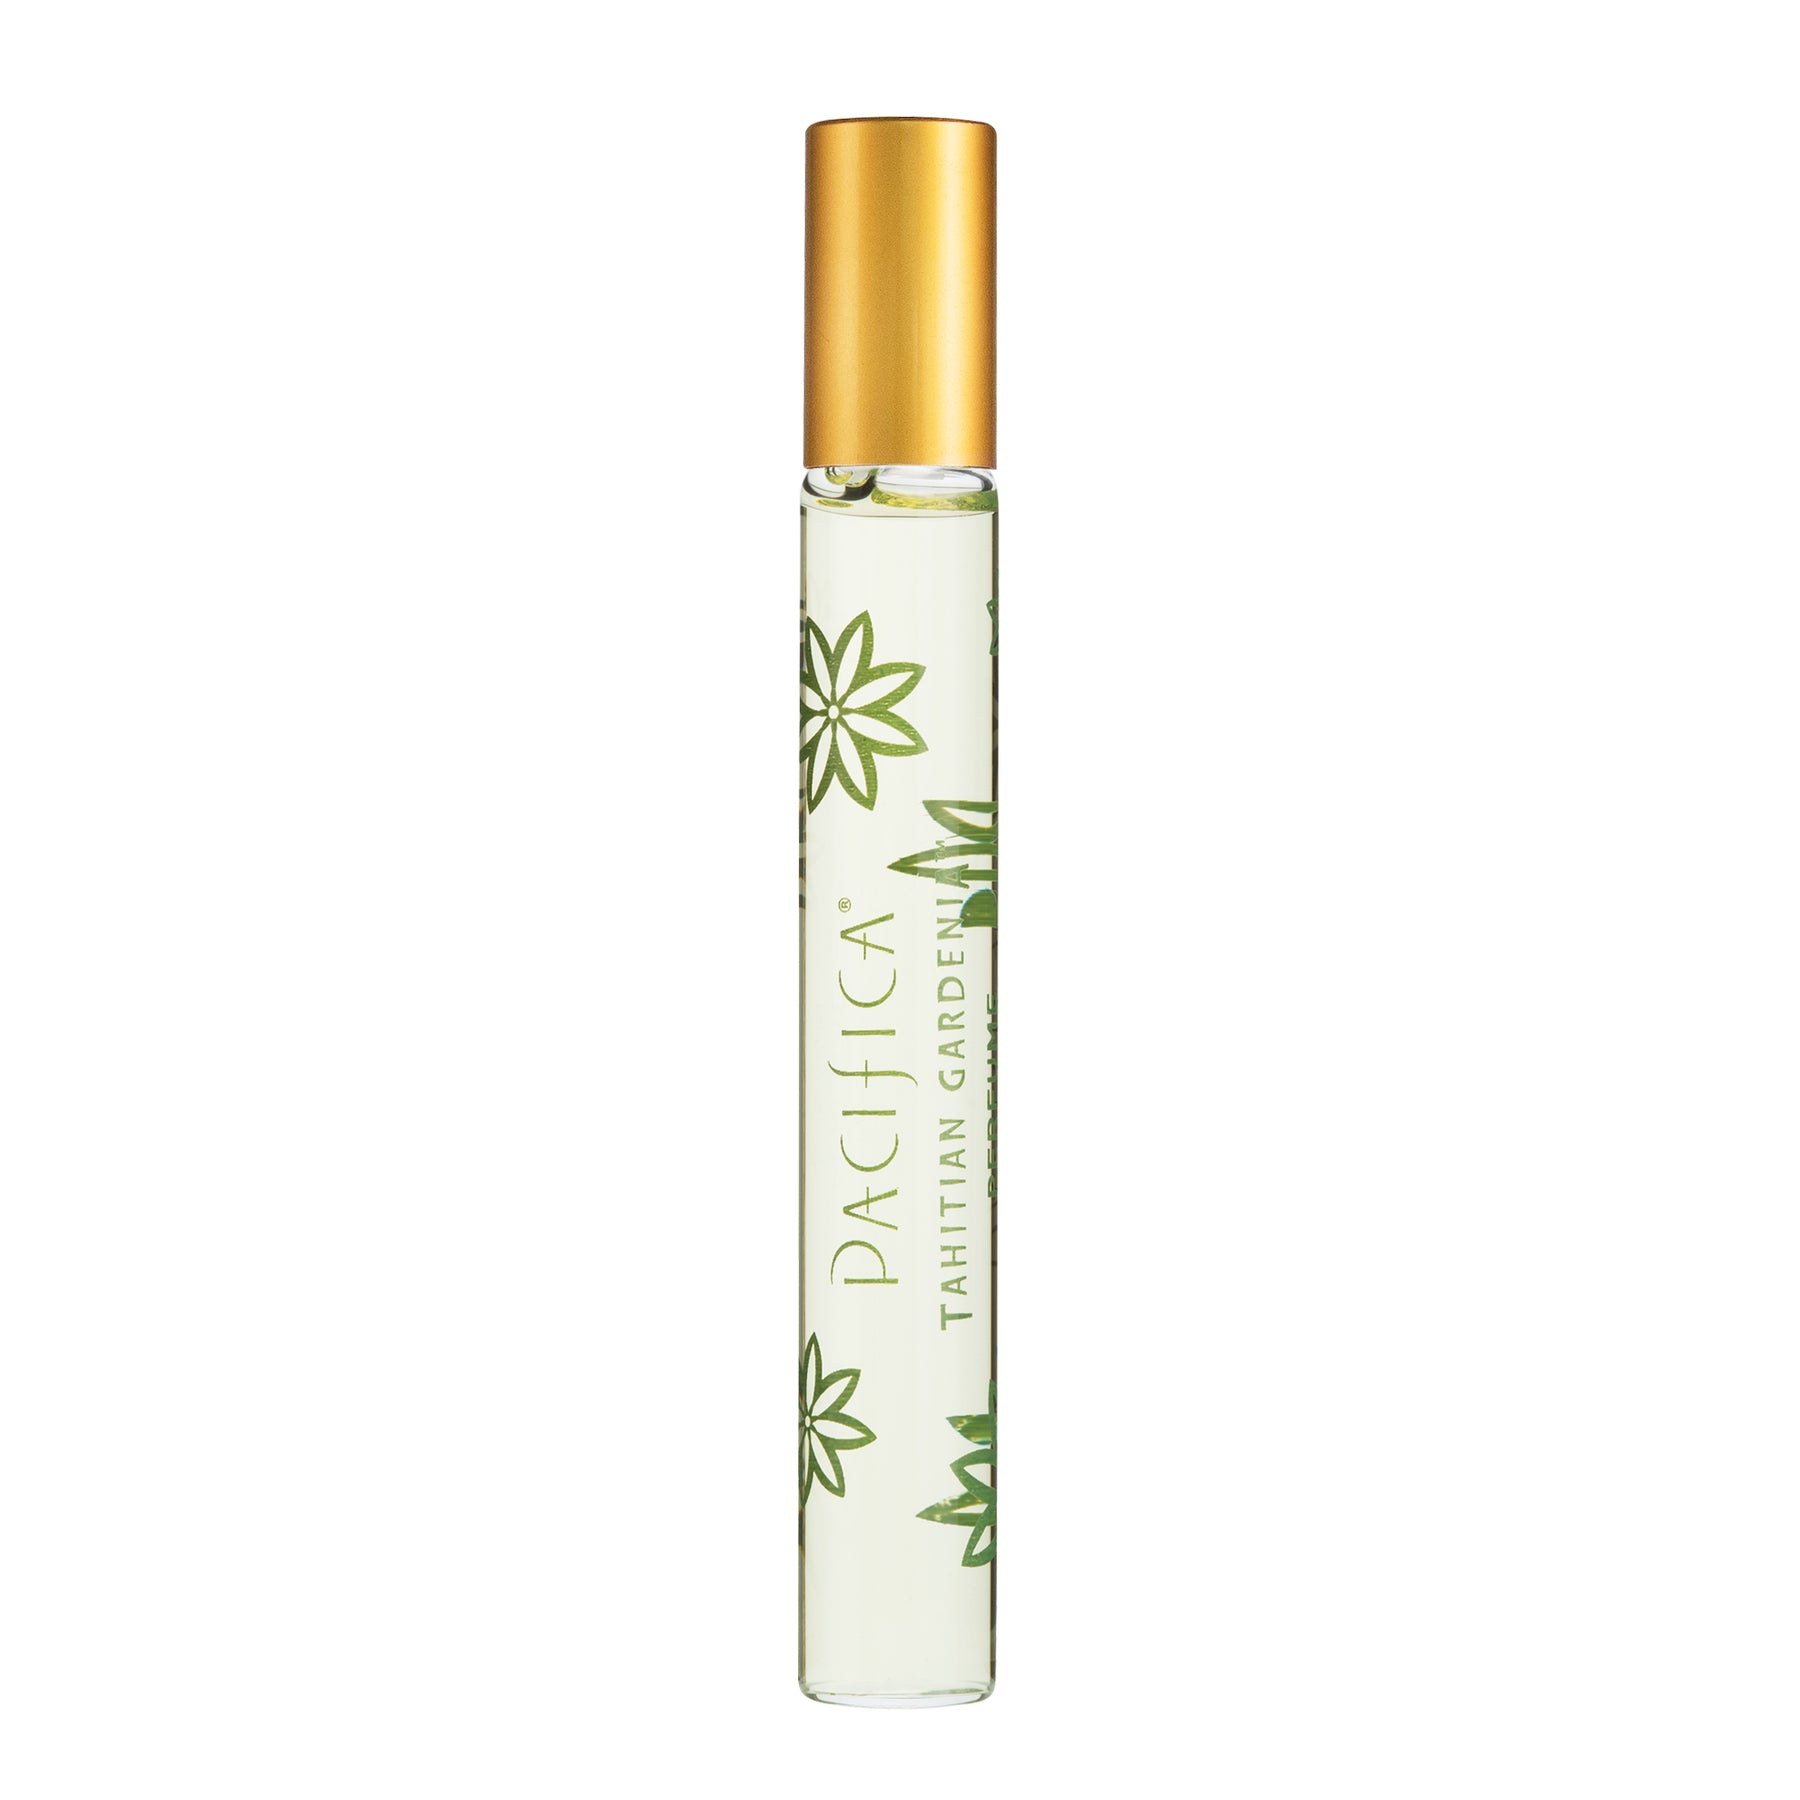 Tahitian Gardenia Roll-on Perfume - Perfume - Pacifica Beauty